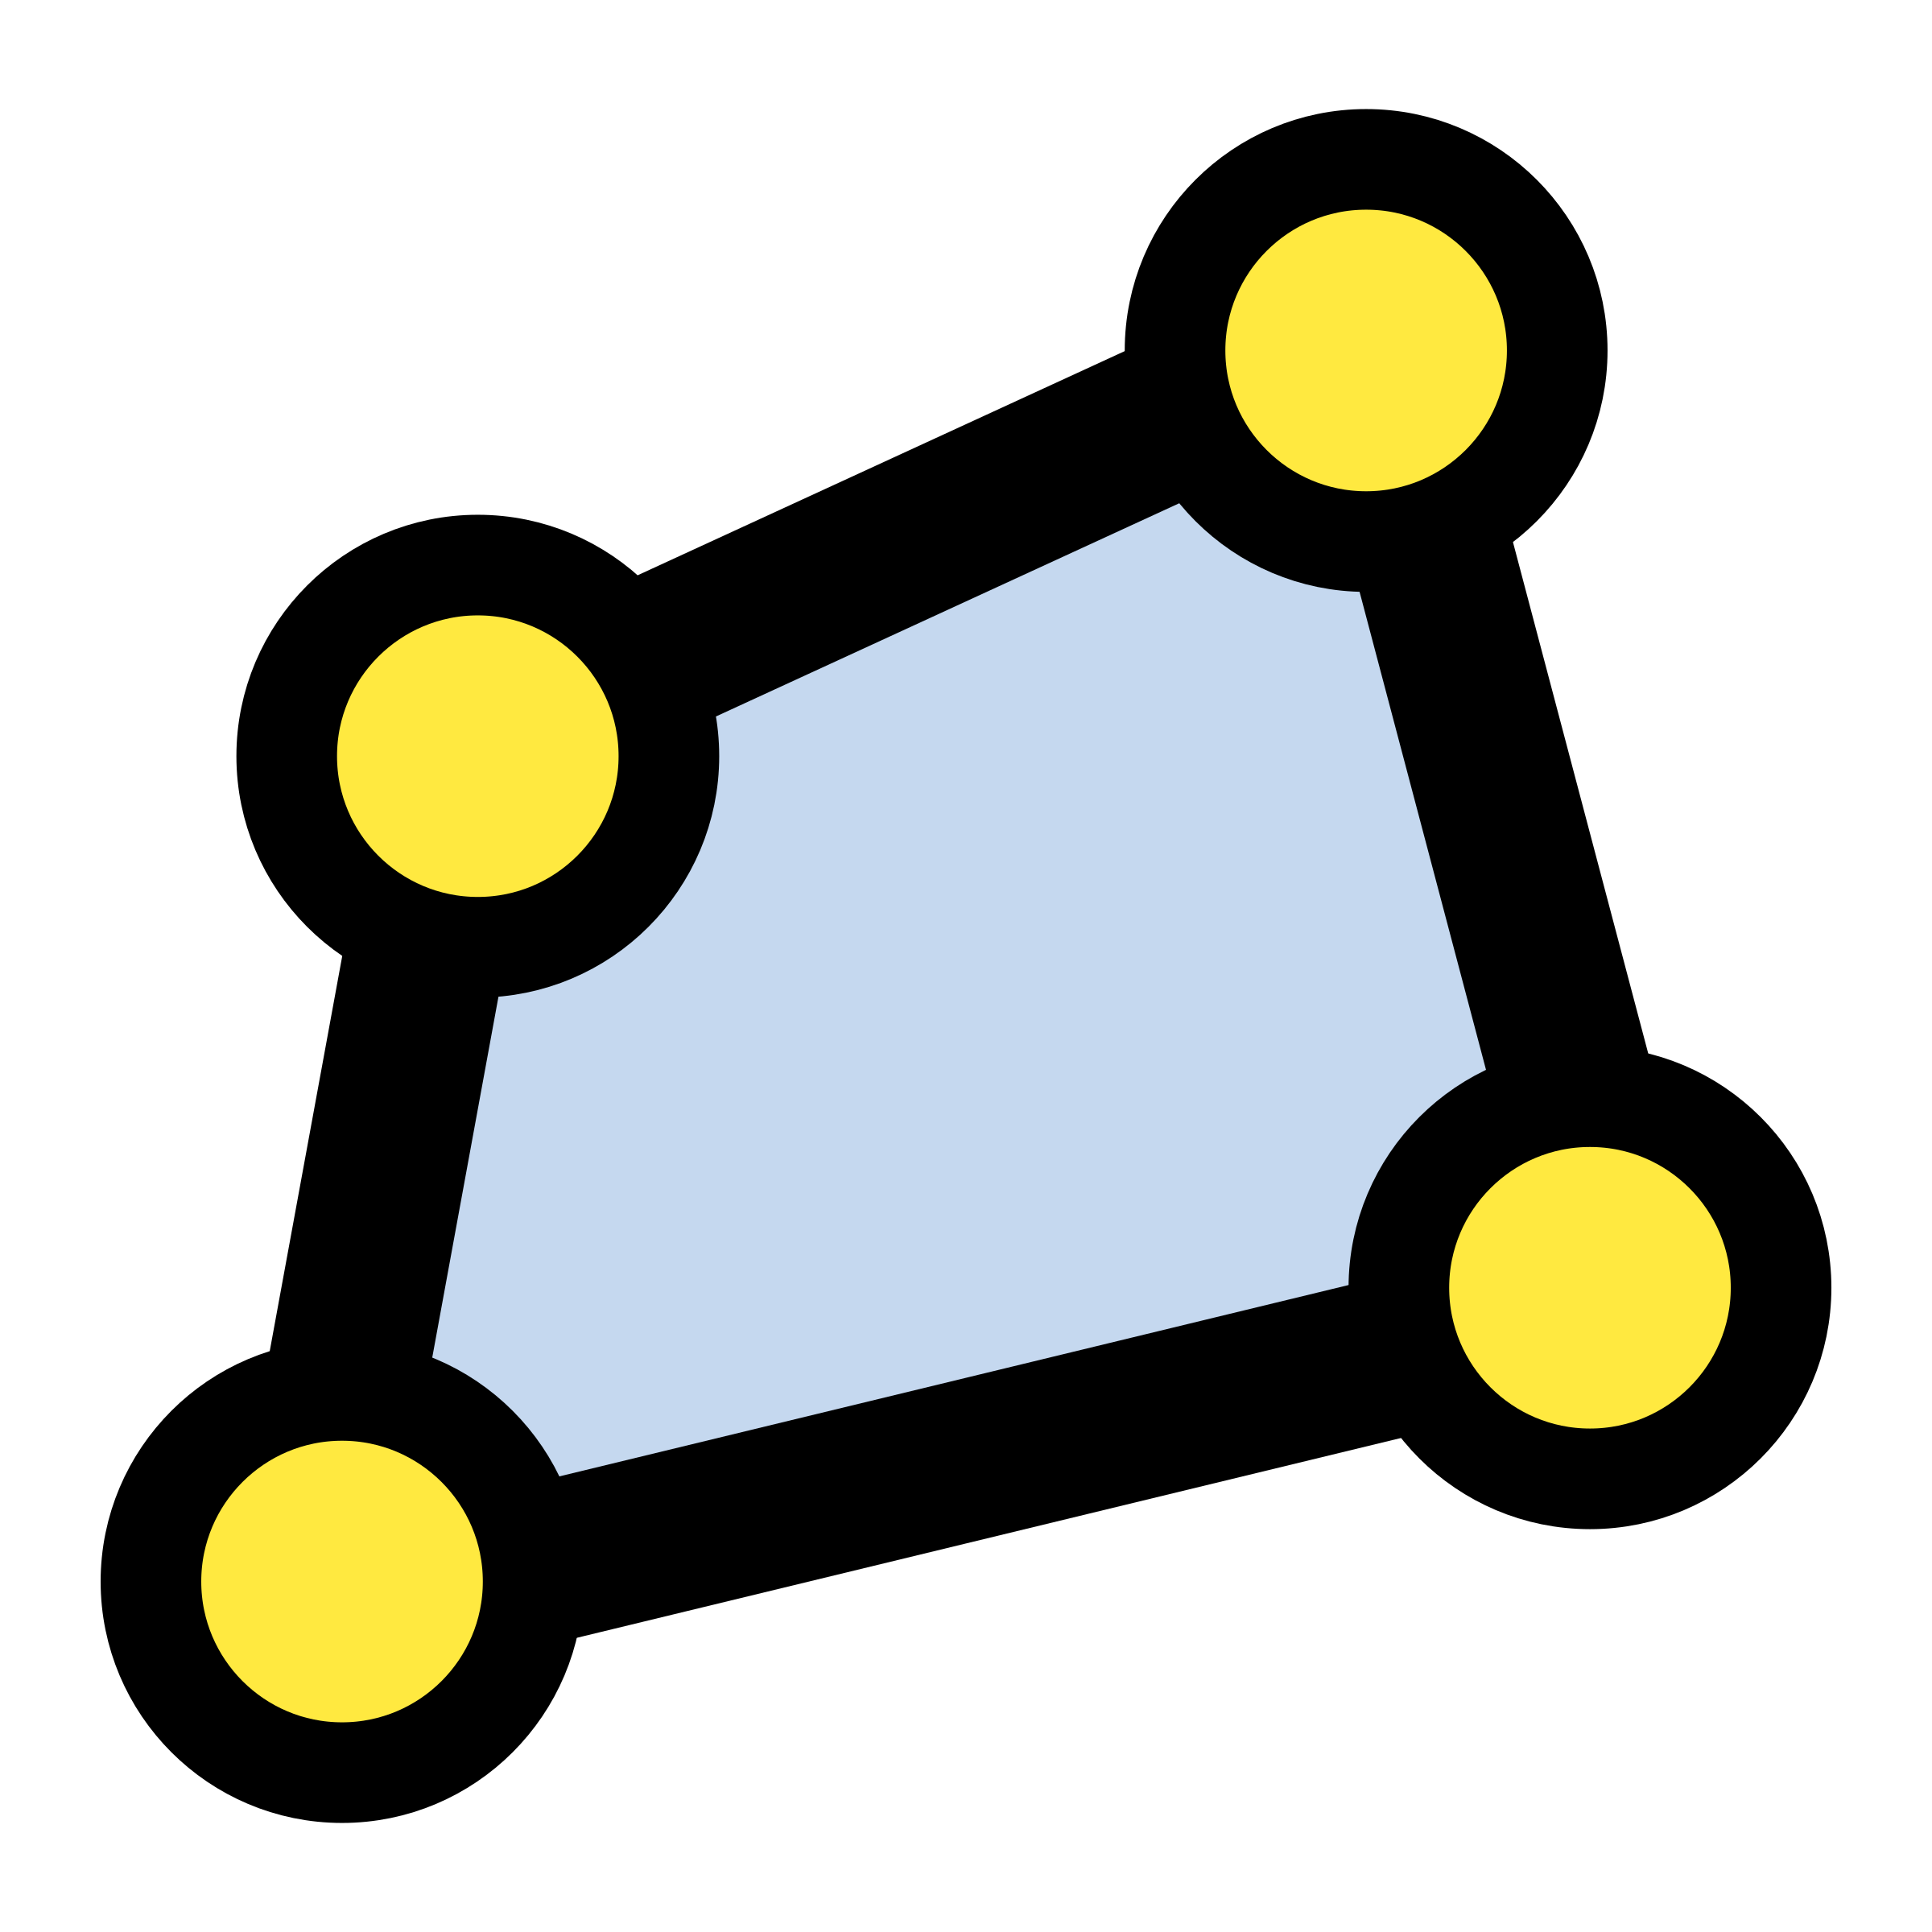 Geometric polygon icon set. An image of a set of geometric clip 